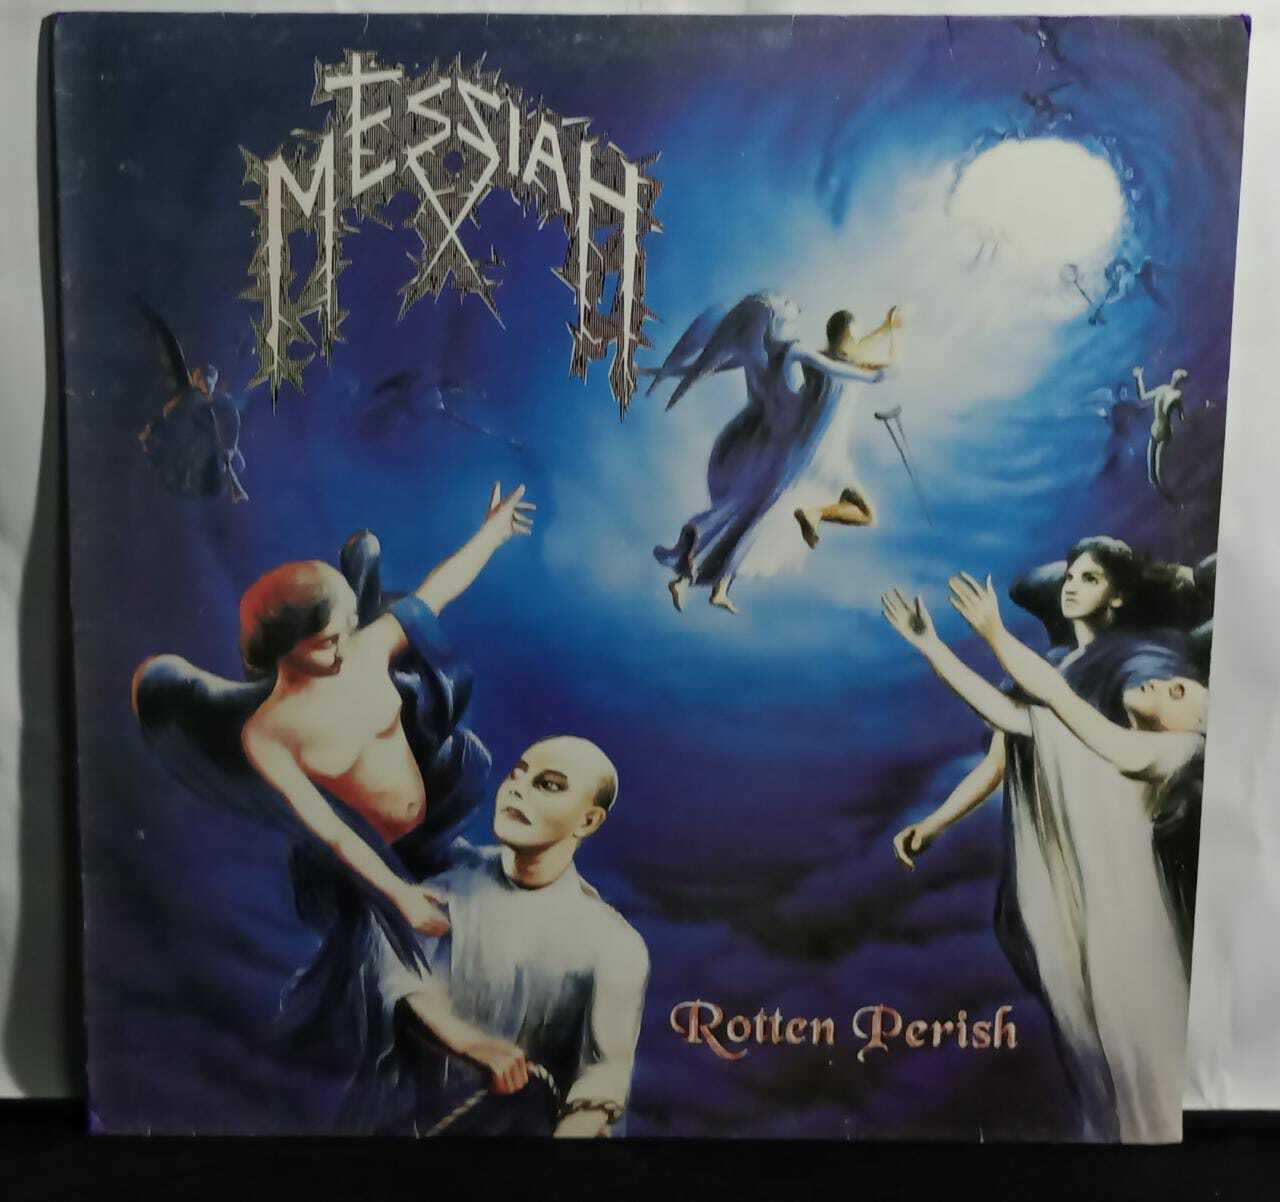 VINIL - Messiah - Rotten Perish